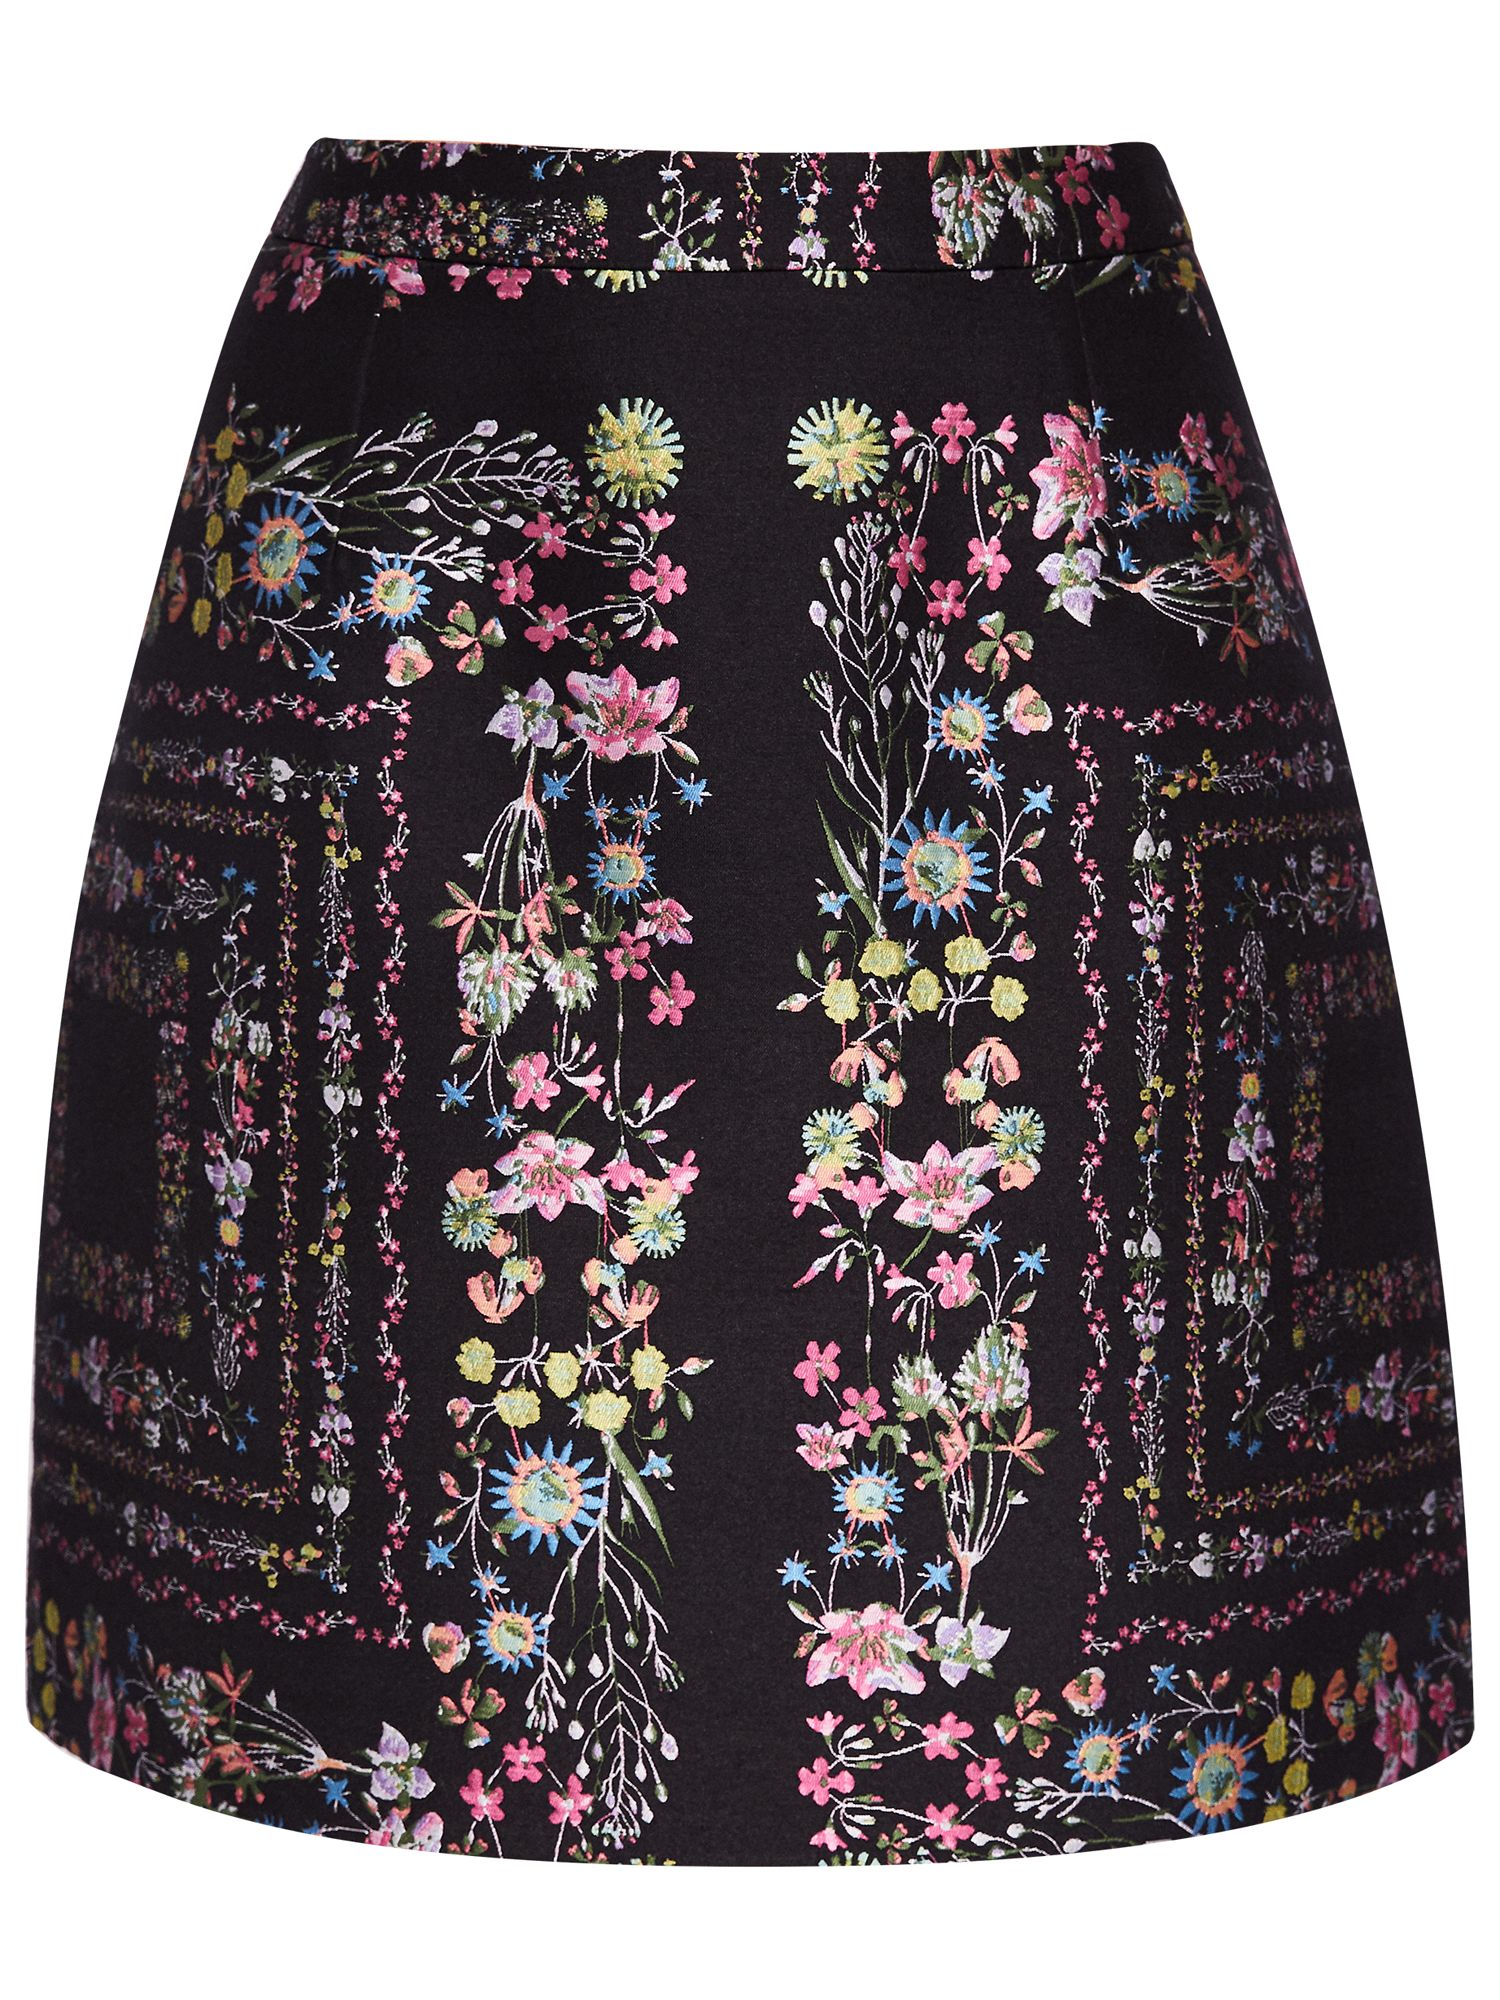 Ted Baker Addizon Unity Floral Skirt, Black/Multi